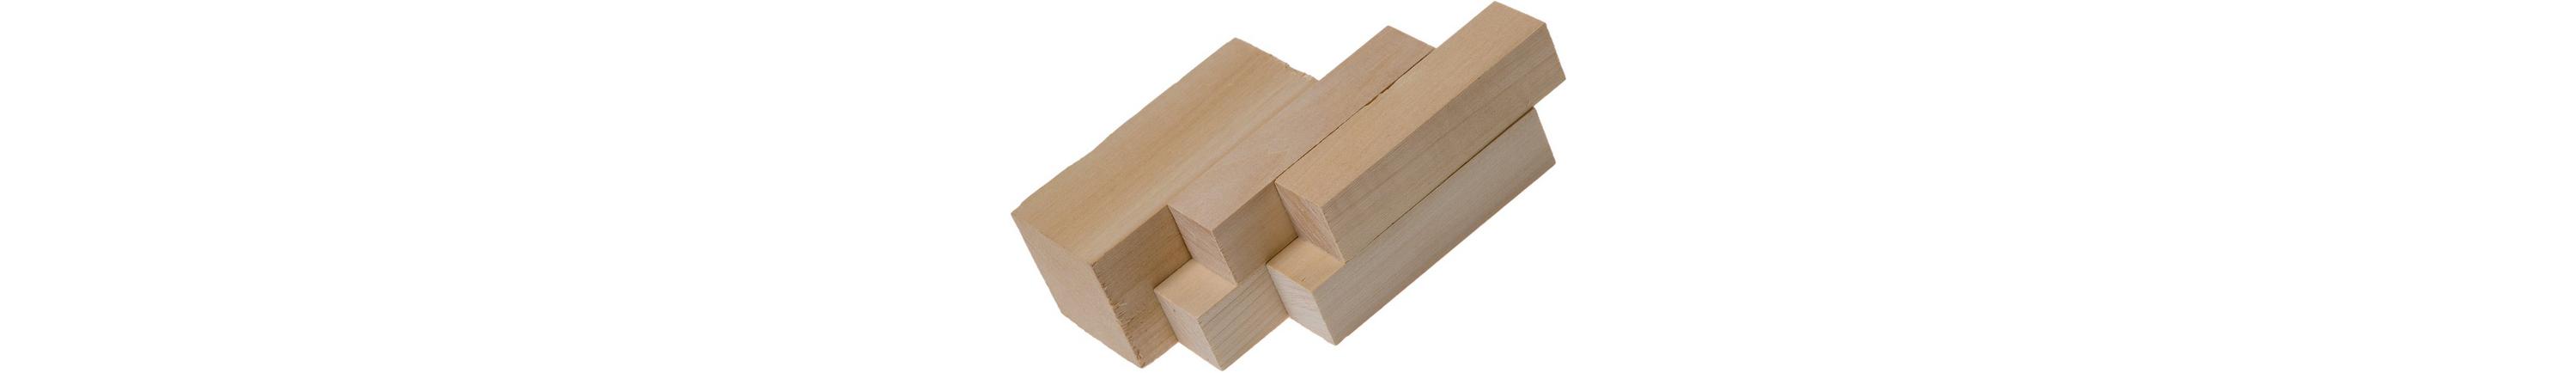 BeaverCraft Wood Carving Blocks BW1  Advantageously shopping at